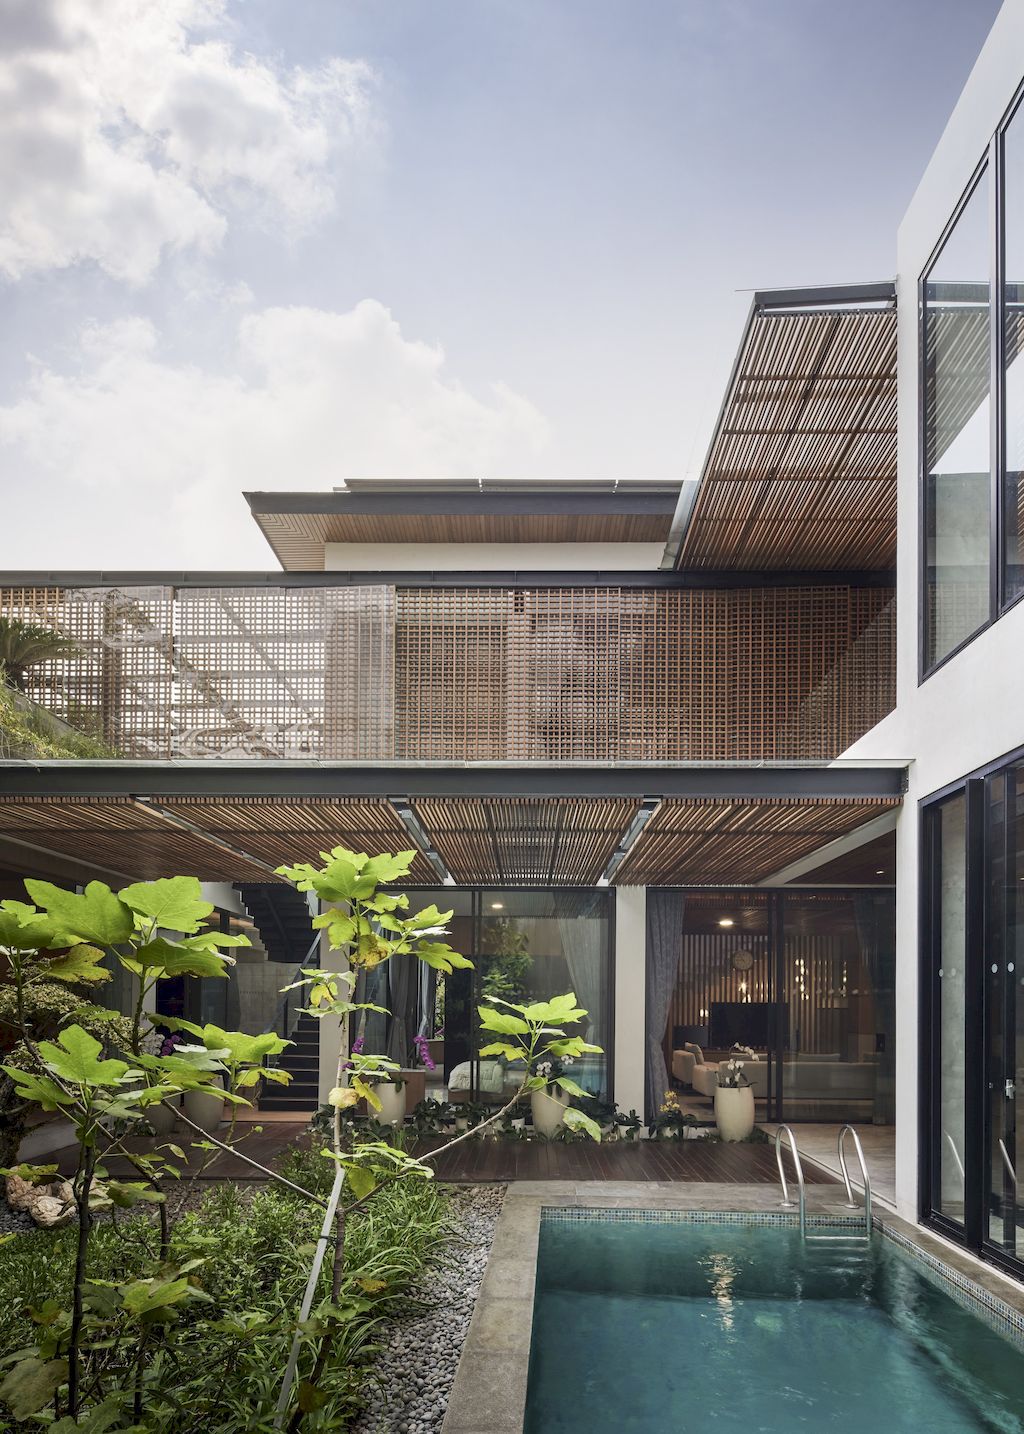 Verdure House, a Harmony of Multi-style in Indonesia by Studio Avana